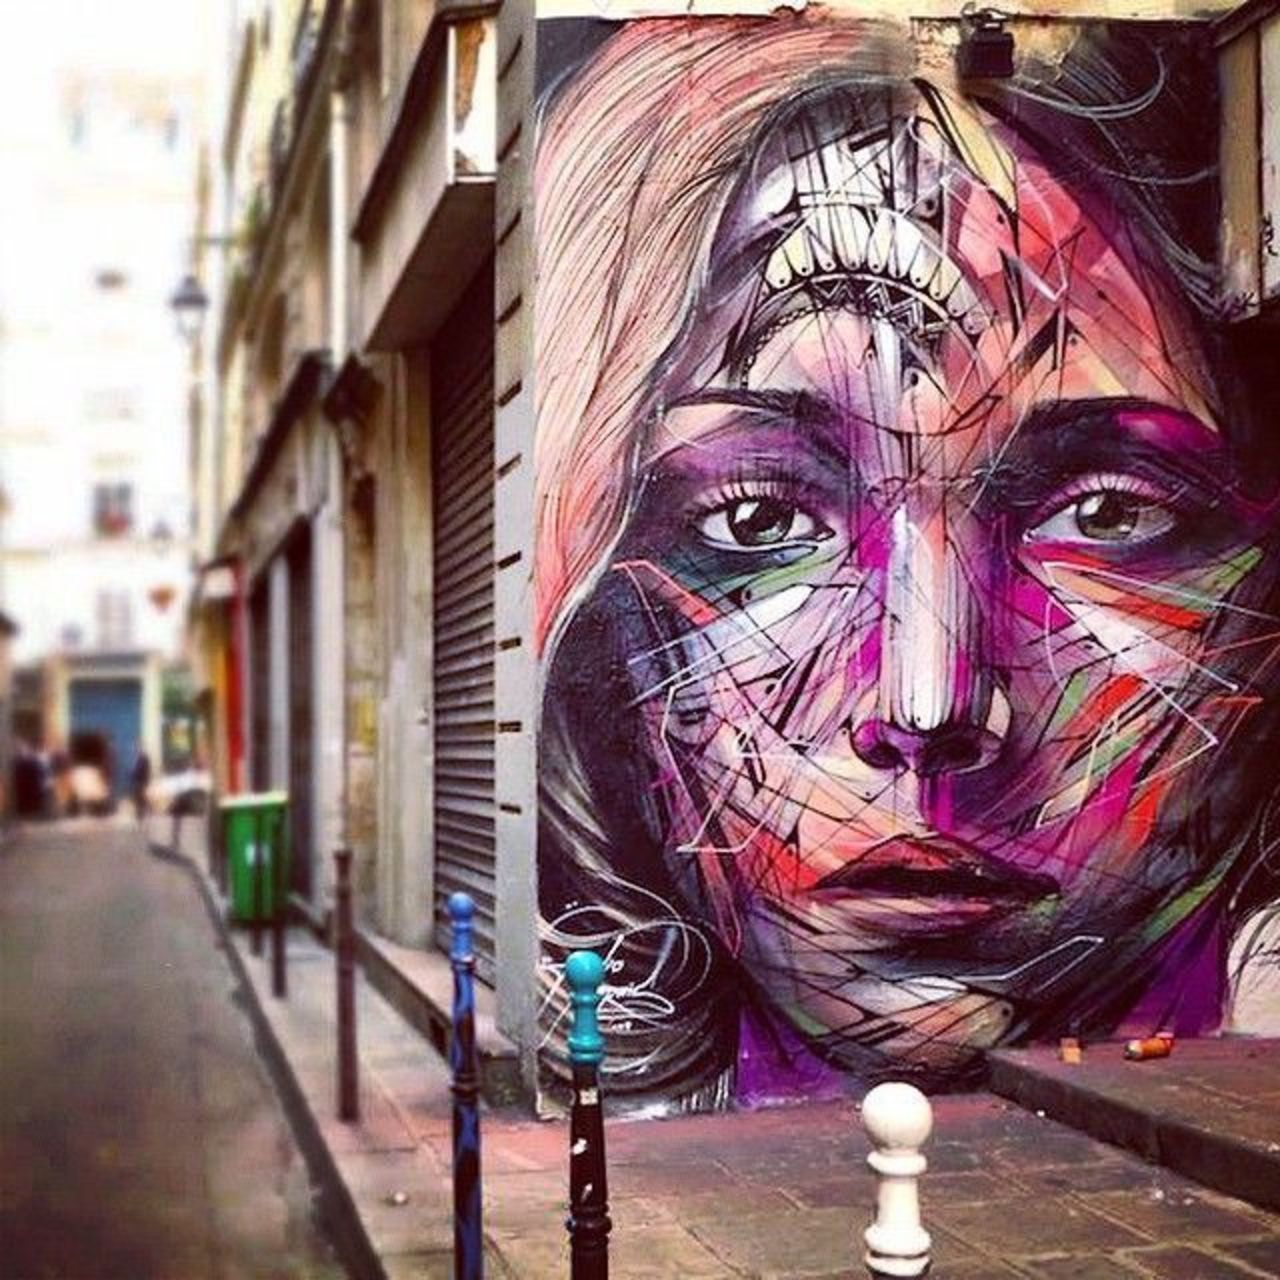 Hopare in Paris#streetart #mural #art #graffiti https://t.co/hZL6Em5Ejp